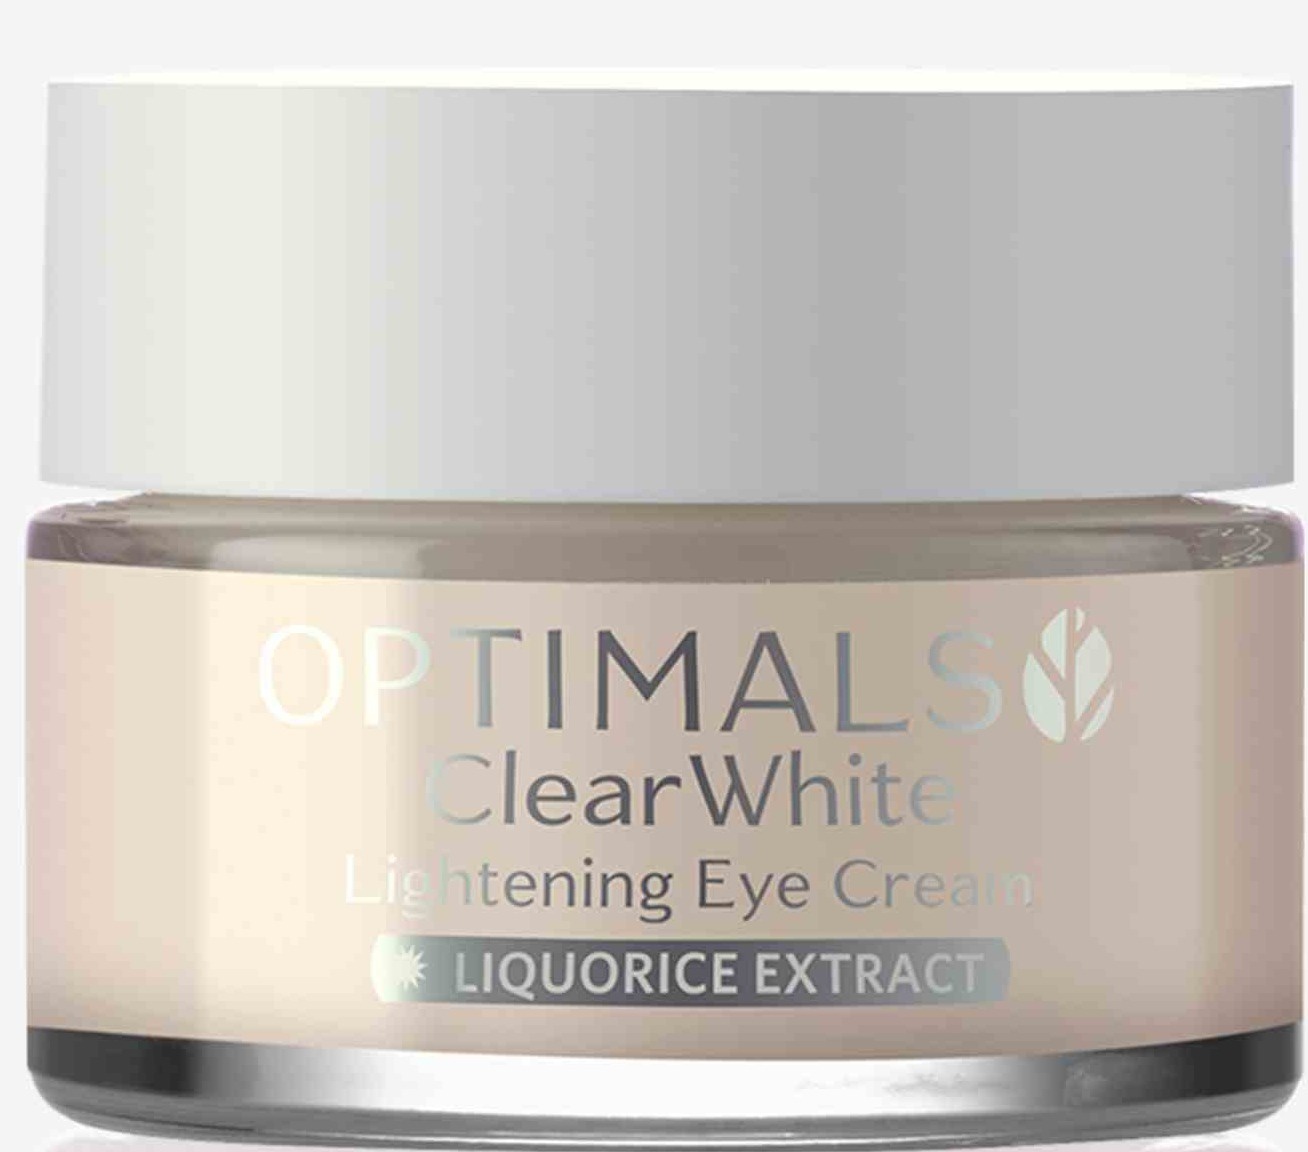 Oriflame Optimals Clear White Lightening Eye Cream